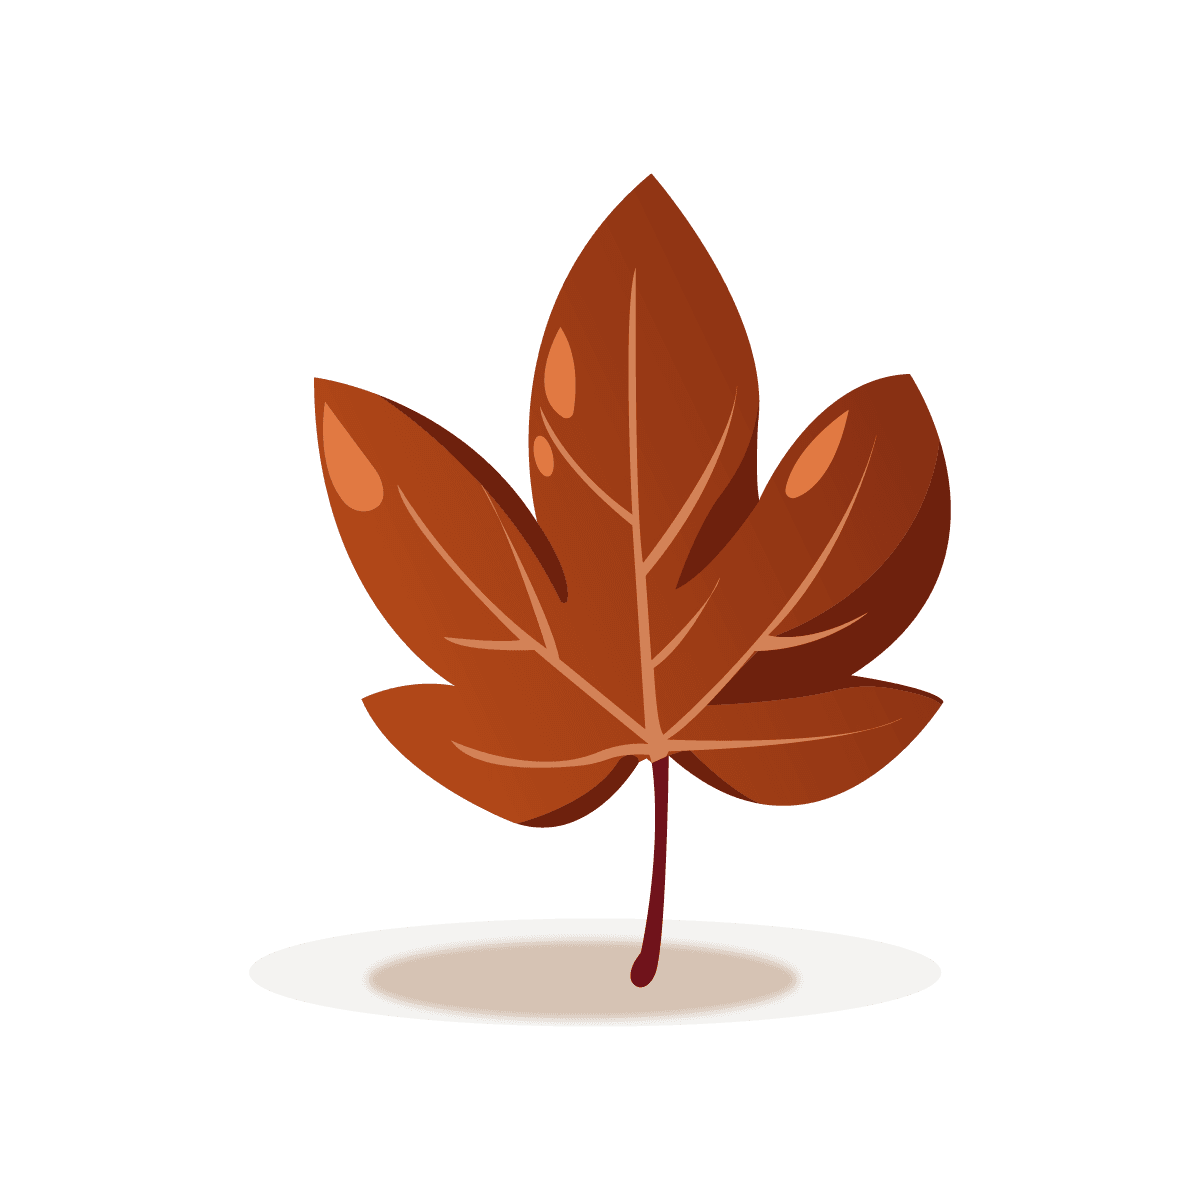 Autumn animal and plant illustrations